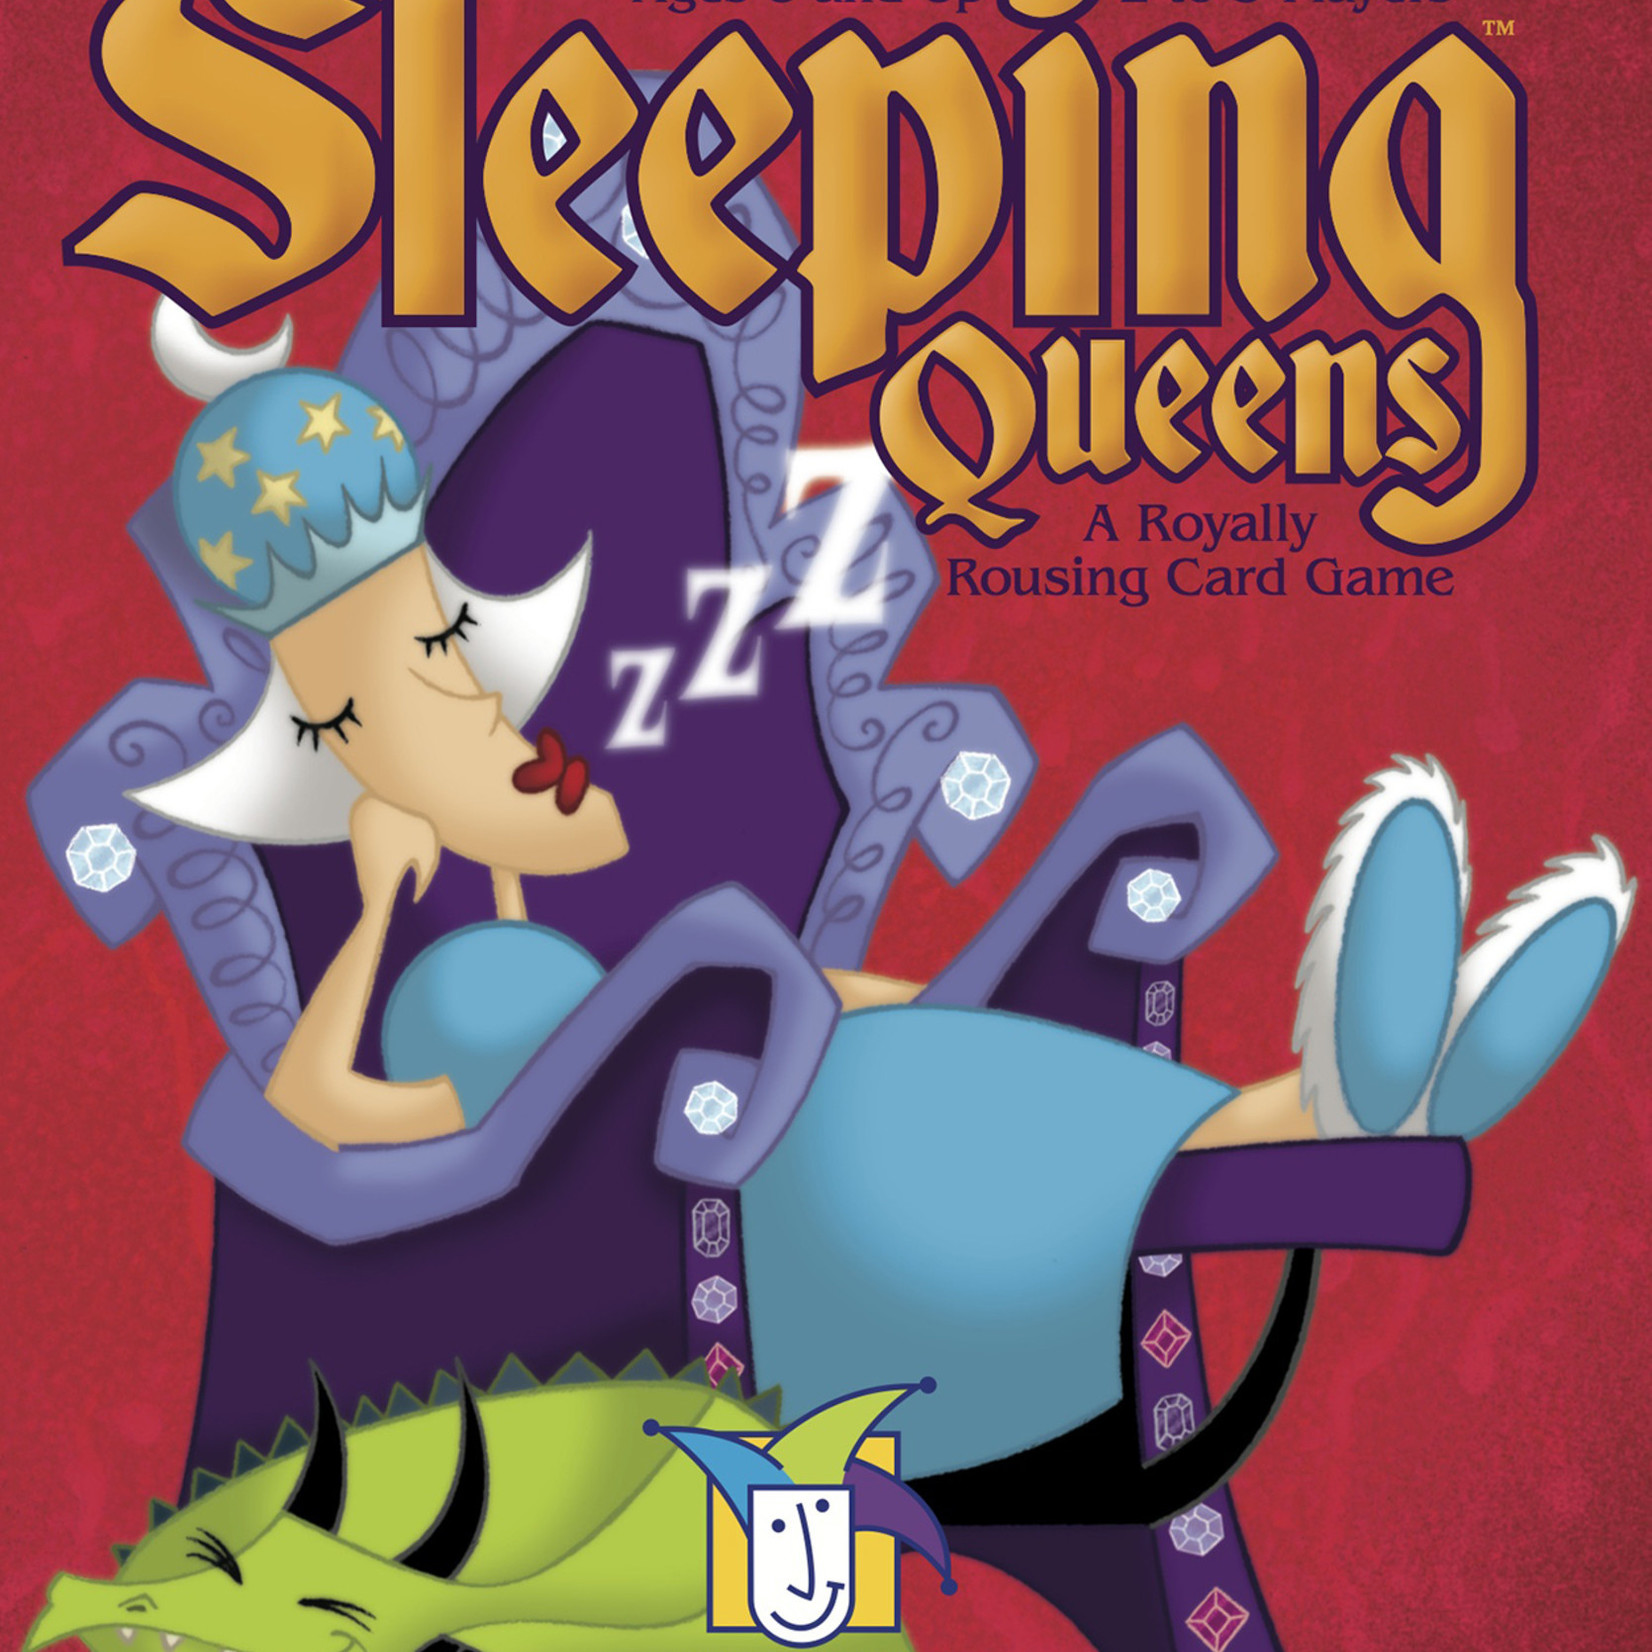 Gamewright Sleeping Queens